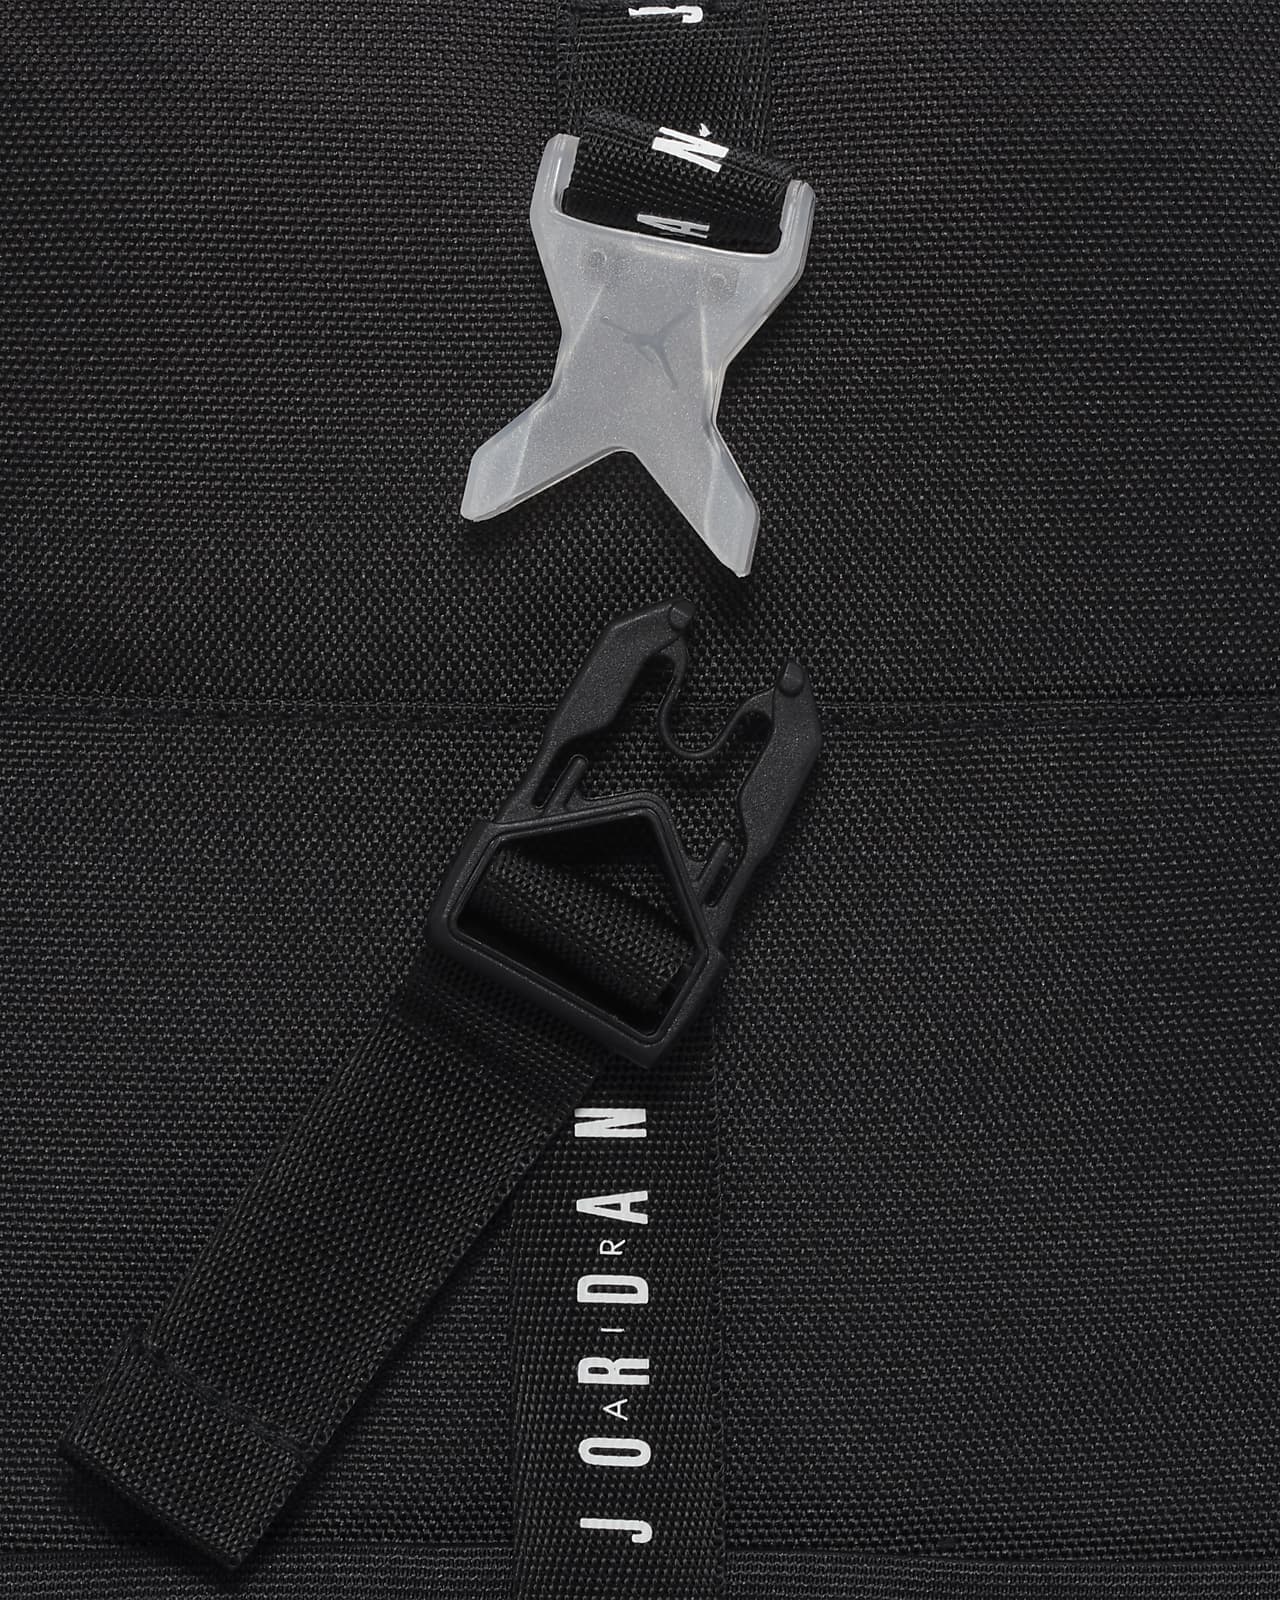 Jordan Kids' Air Lunch Bag and Backpack in Black/Black | 100% Polyester